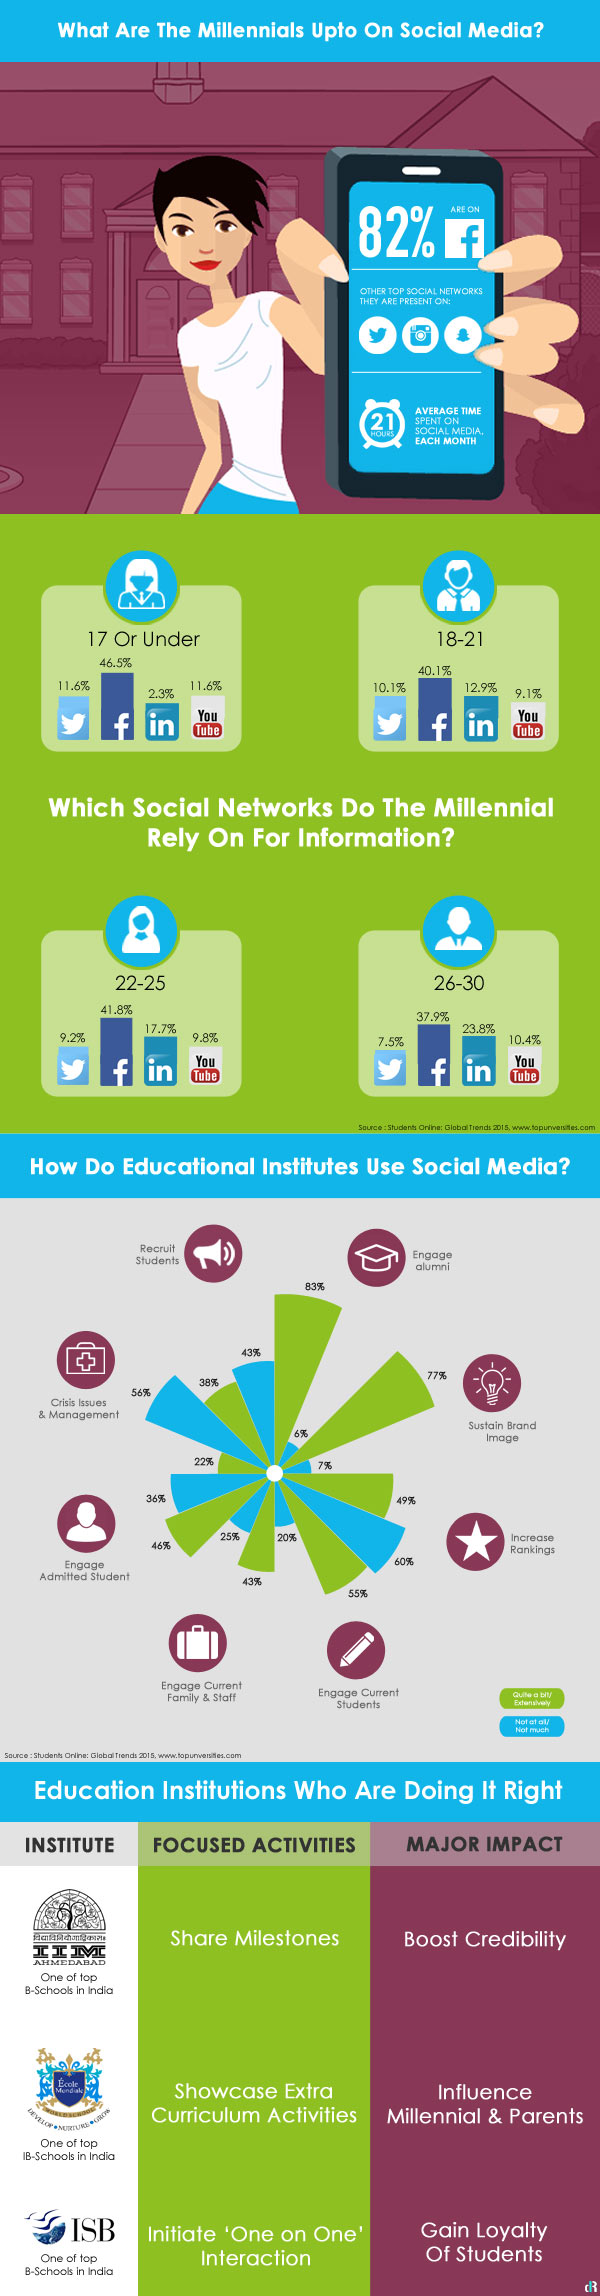 impact-of-social-media-on-education